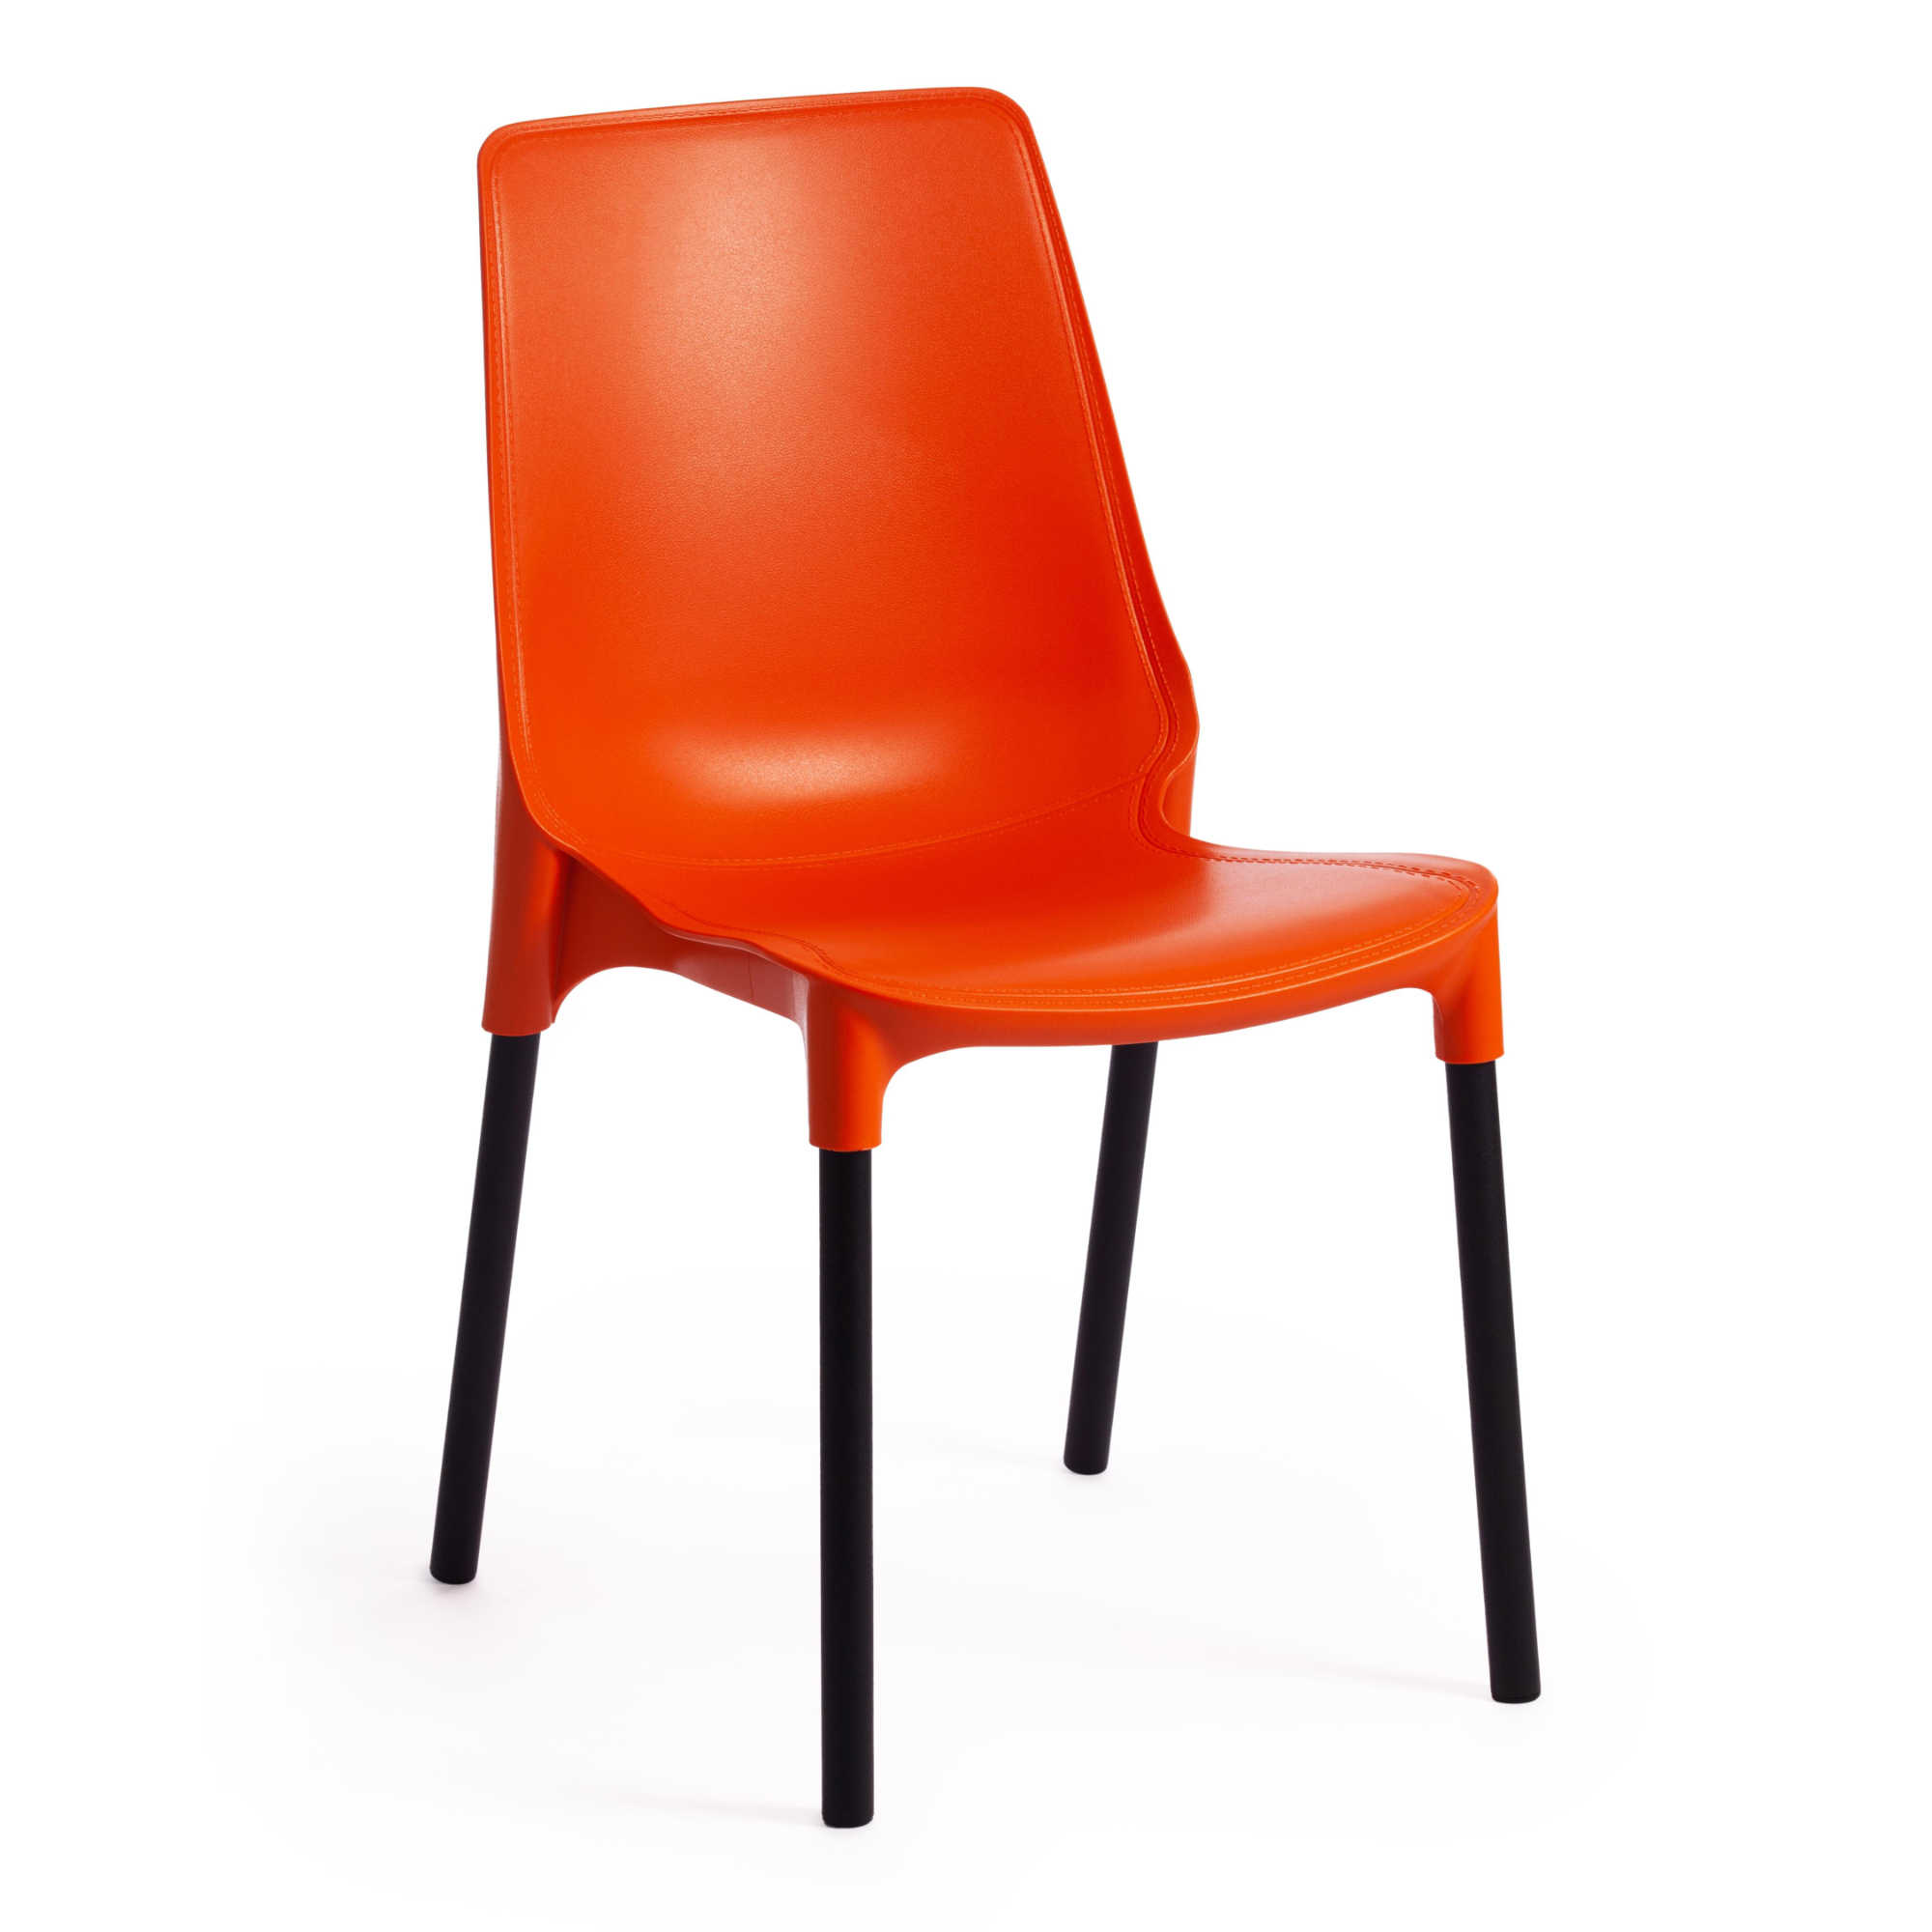 Стул ТС пластик с металлическими ножками оранжевый 46х56х84 см стул genius серый 19671